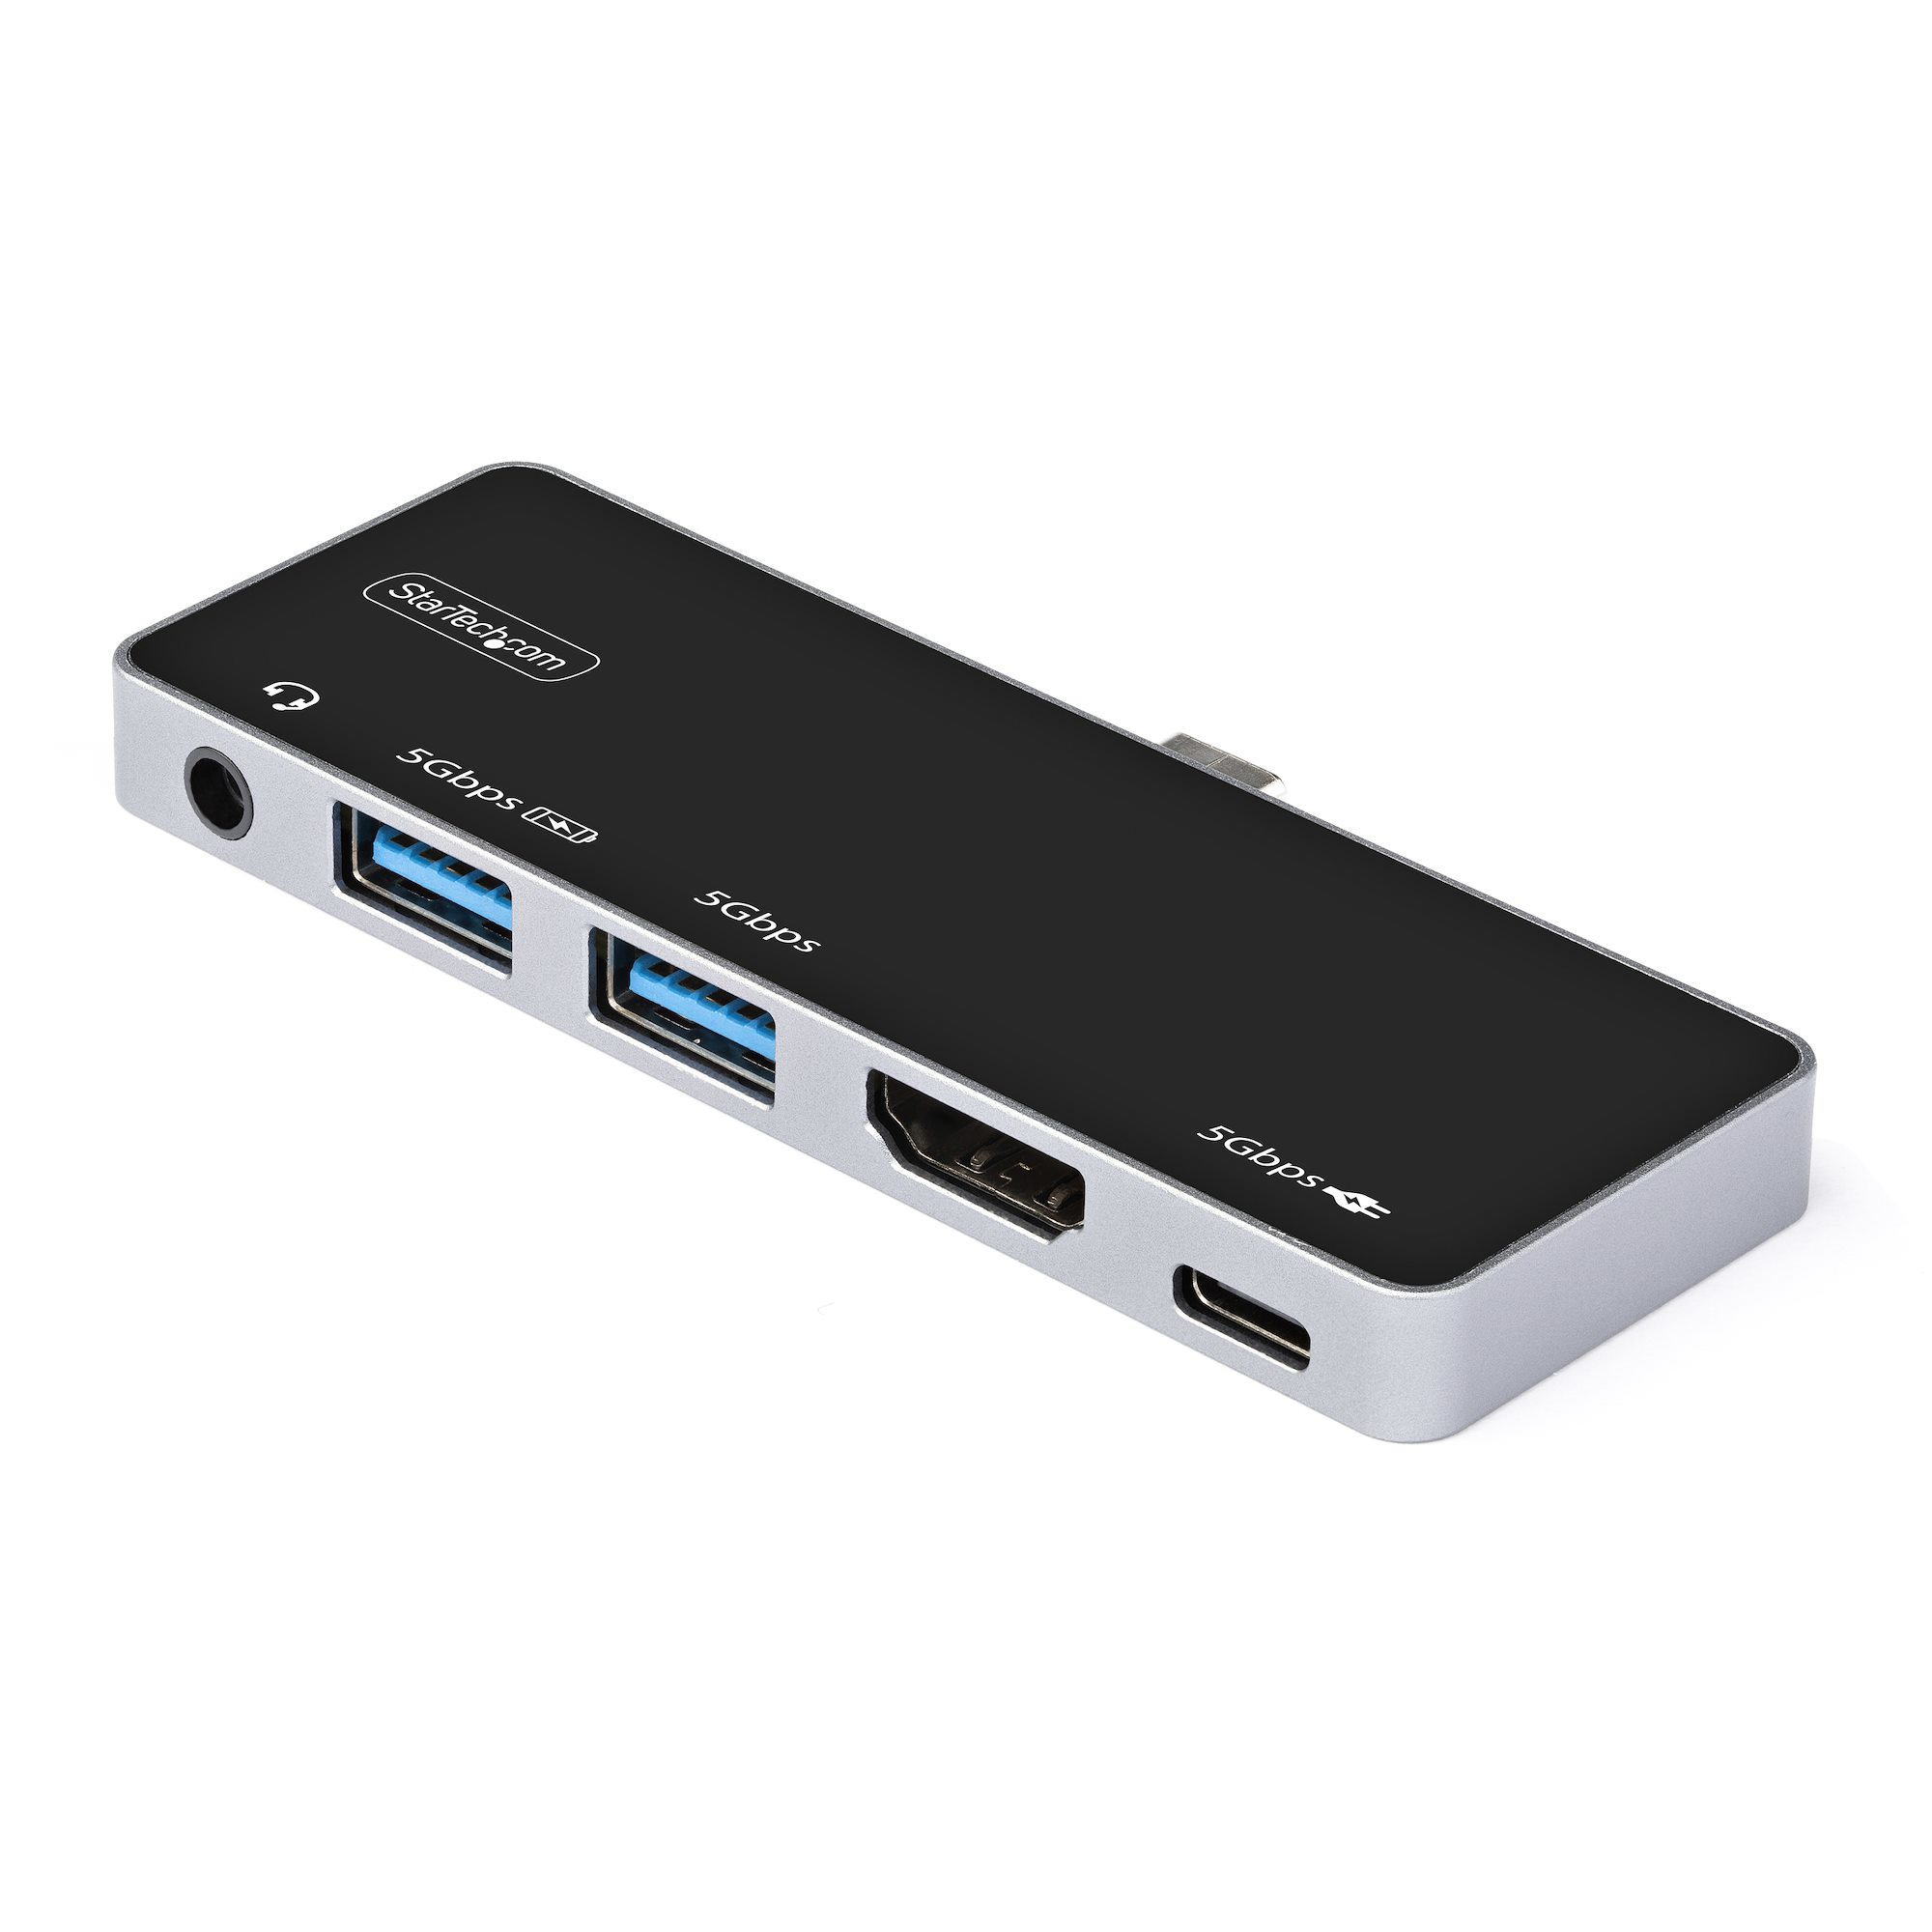 StarTech.com USB C Multiport Adapter - USB-C to 4K 60Hz HDMI 2.0, 100W Power Delivery Pass-Through Charging, 3-Port USB 3.0 Hub, Audio - USB-C Mini Dock - Portable USB Type-C Travel Dock